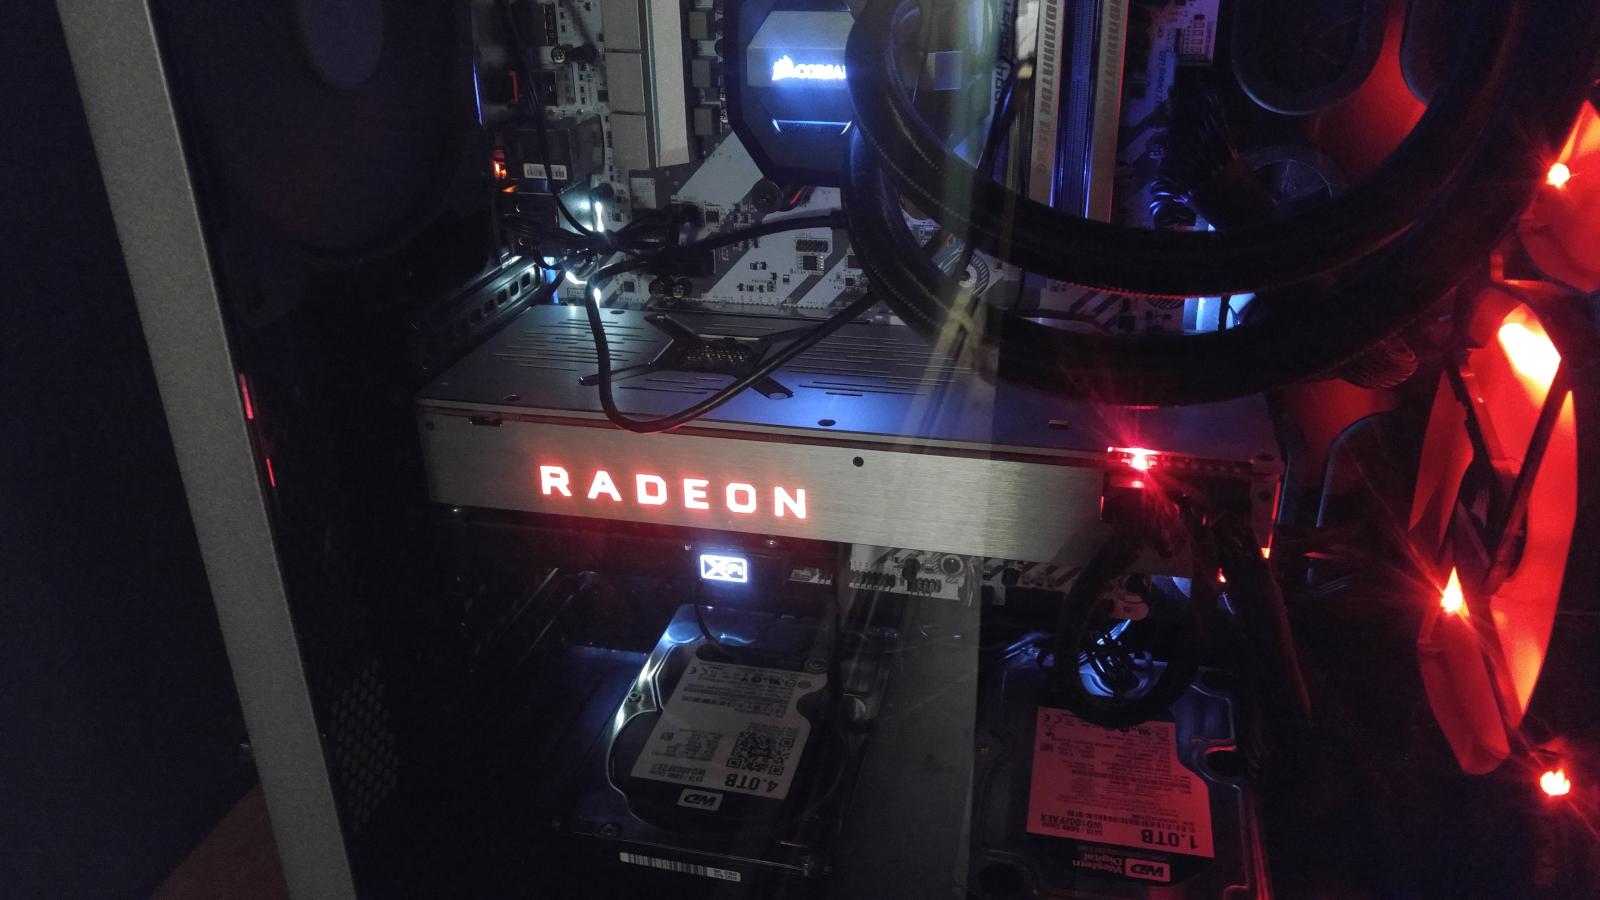 For sale Gigabyte AMD Radeon RX Vega 64 Limited Edition 8GB HBM2